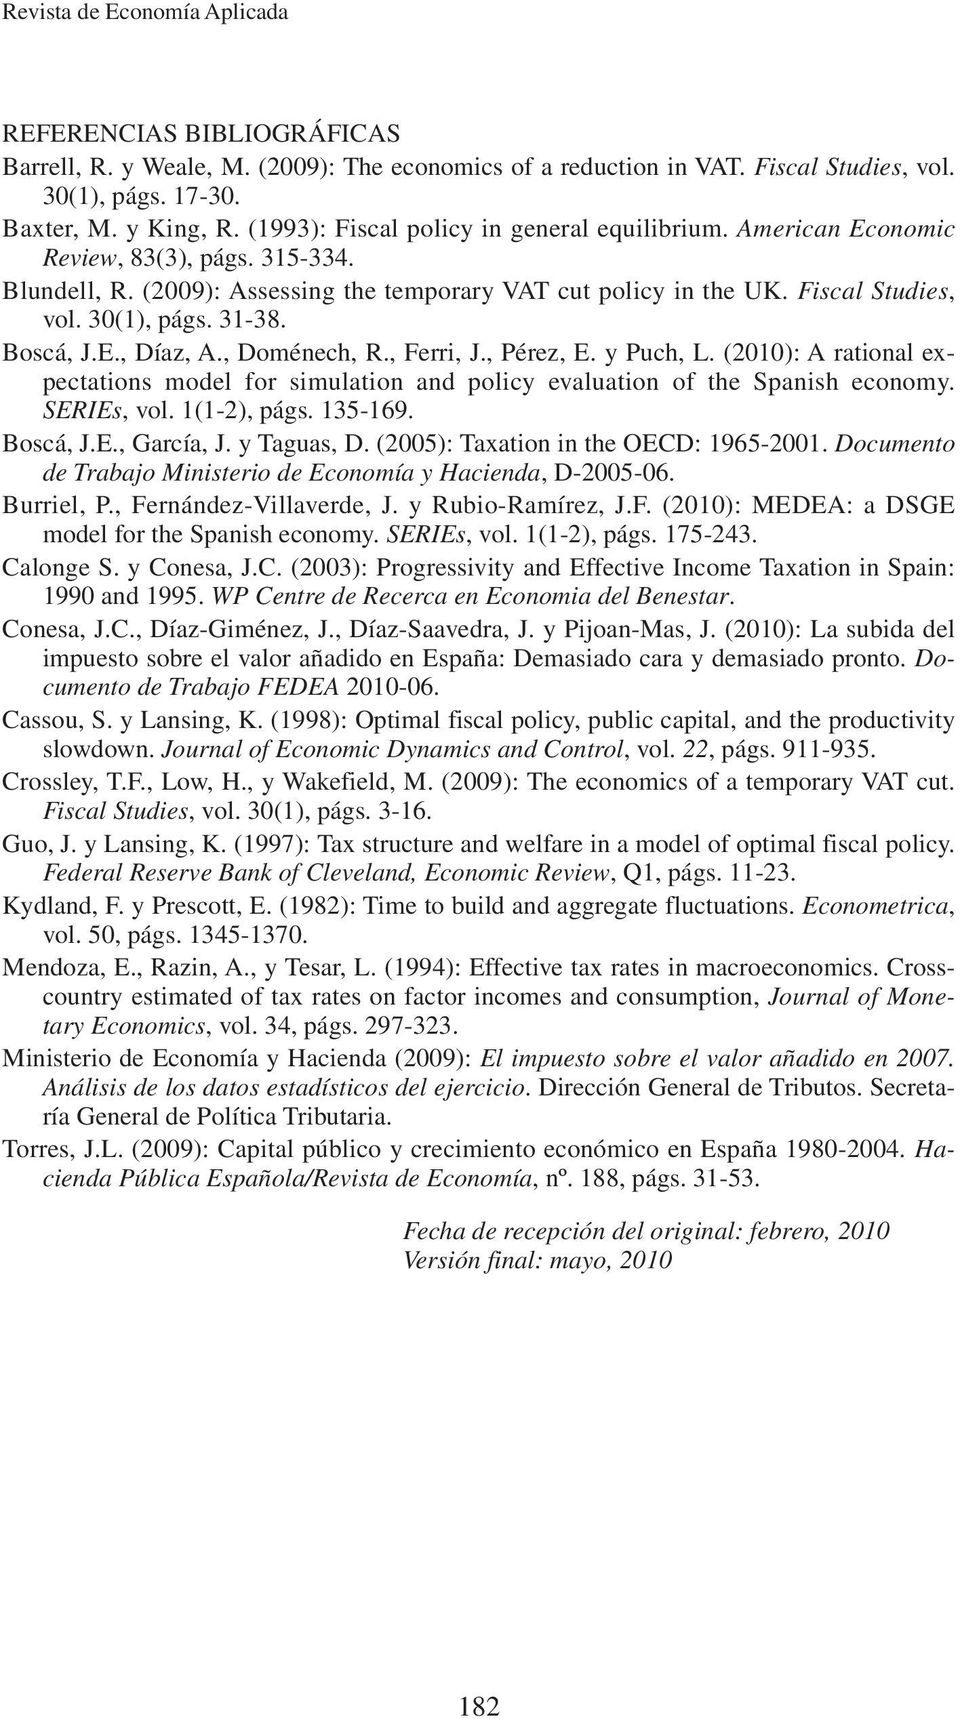 Boscá, J.E., Díaz, A., Doménech, R., Ferri, J., Pérez, E. y Puch, L. (2010): A raional expecaions model for simulaion and policy evaluaion of he Spanish economy. SERIEs, vol. 1(1-2), págs. 135-169.